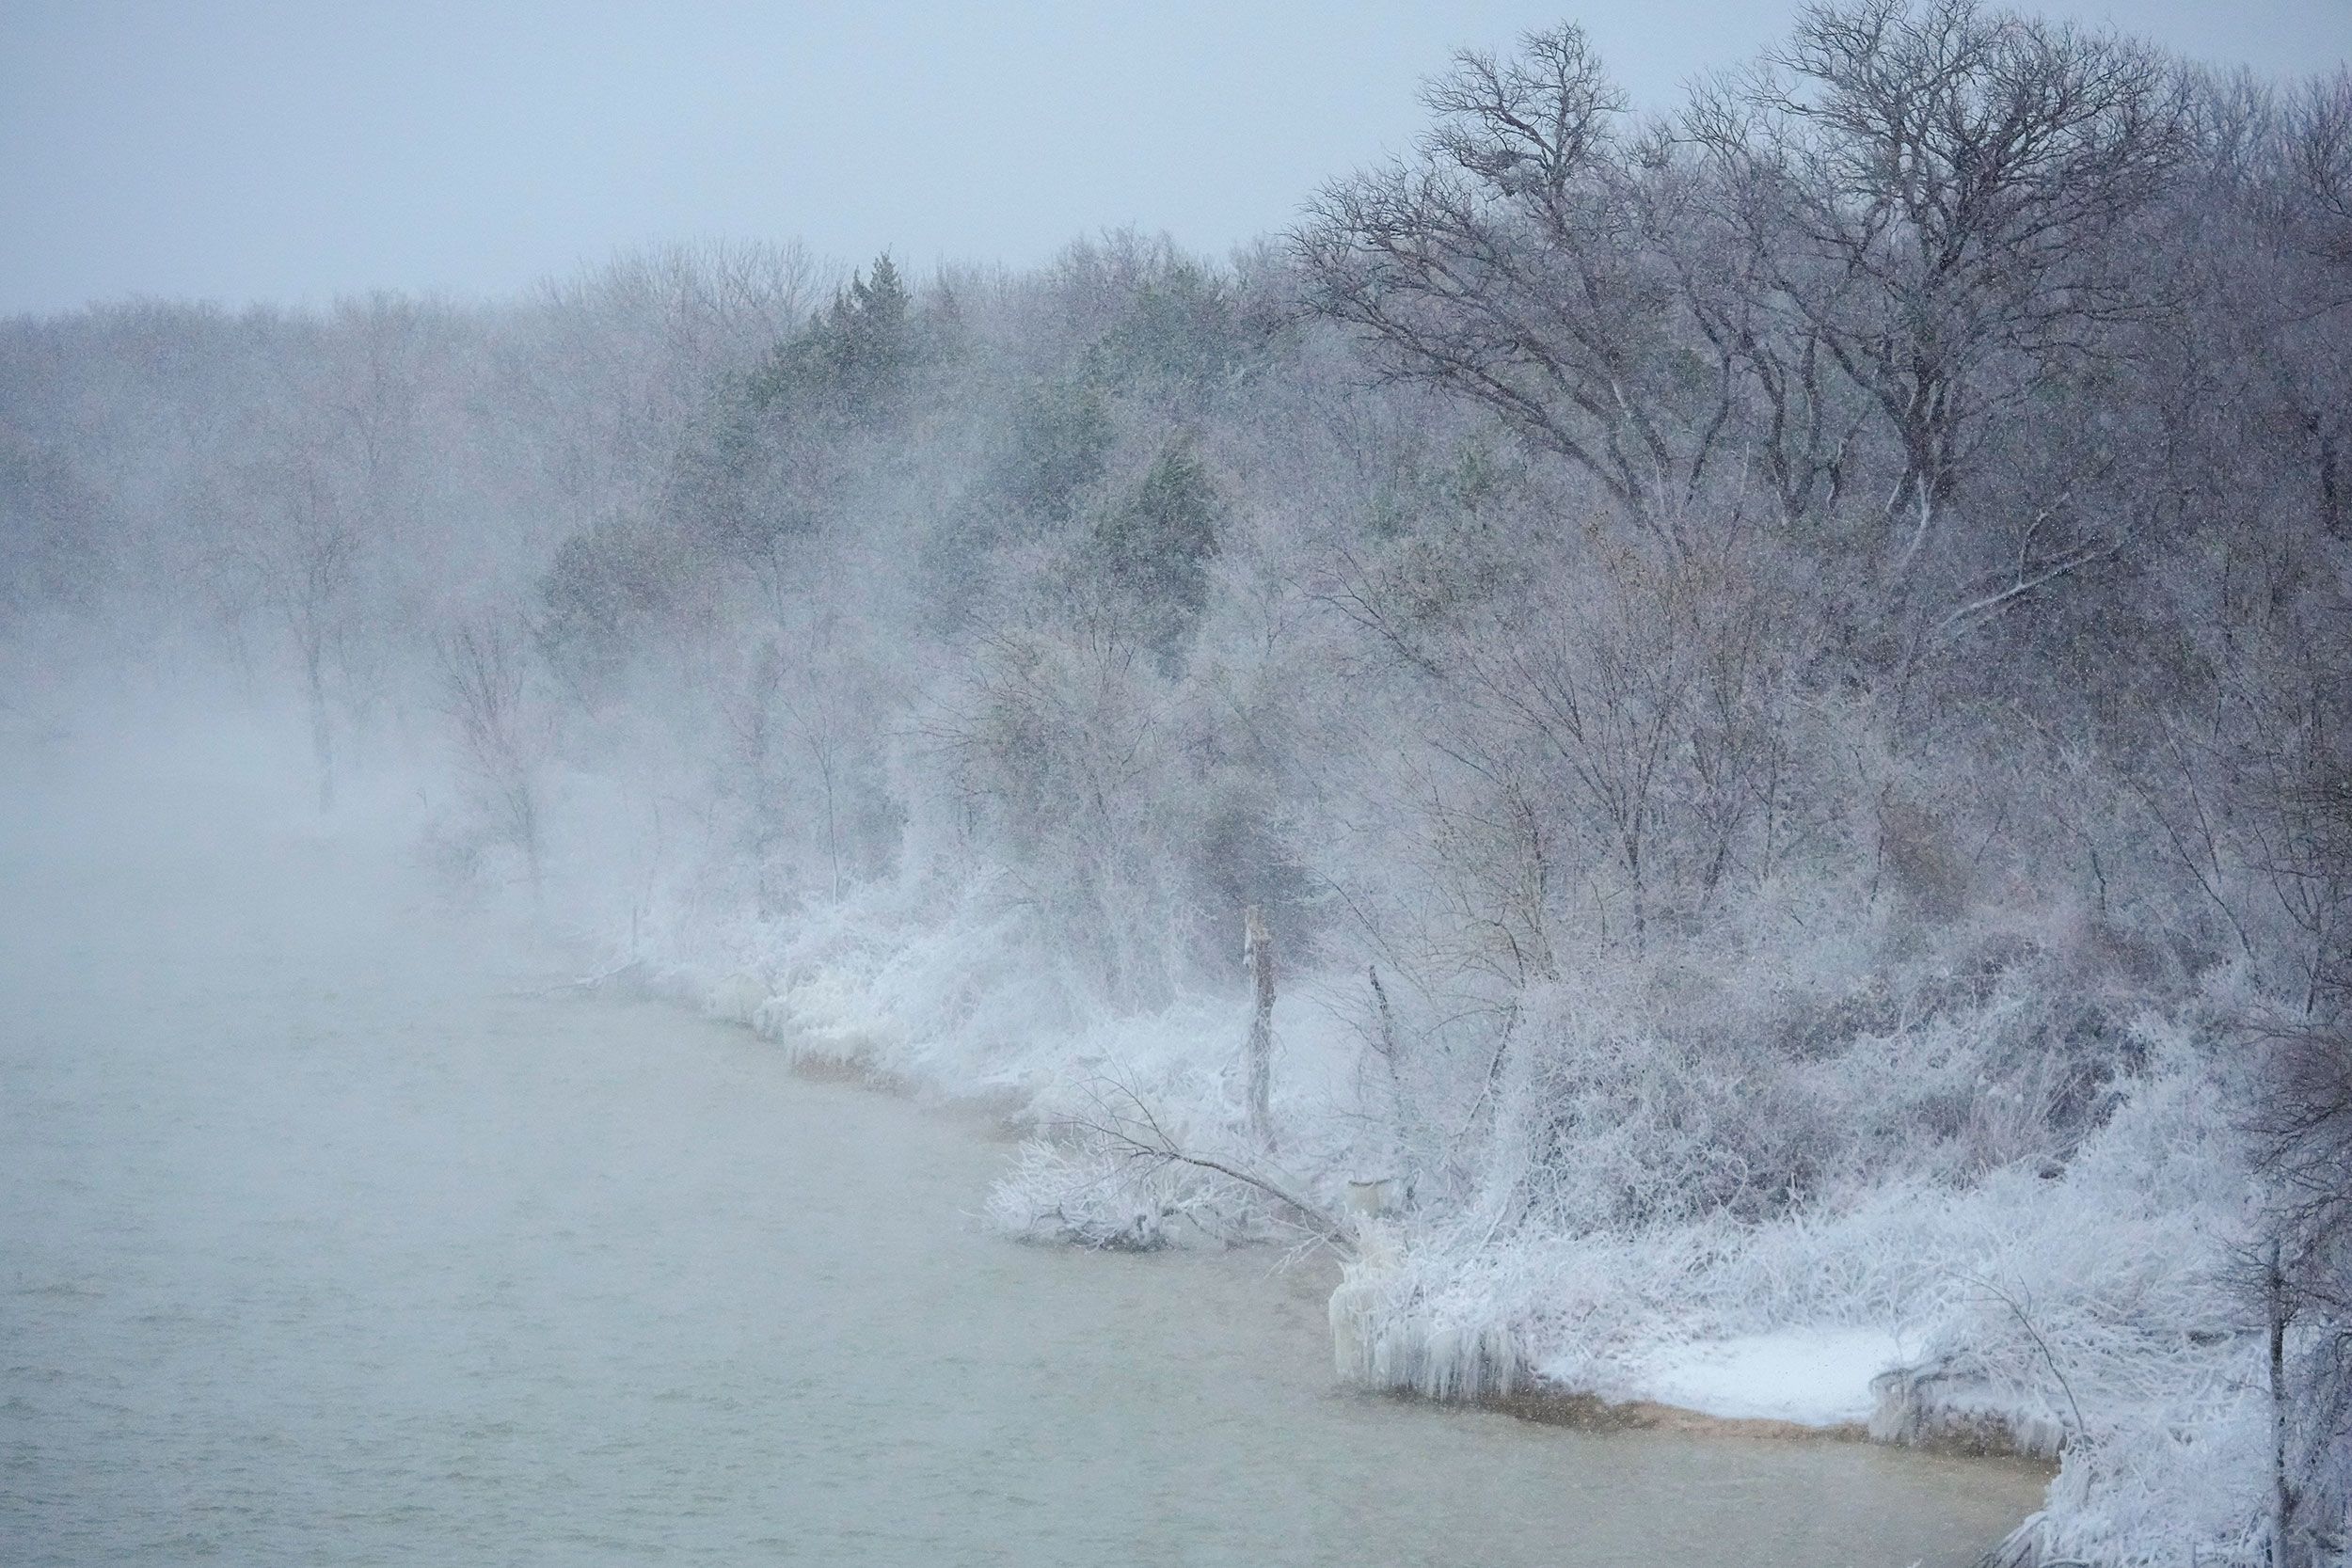 Wild Winter Weather Hits U.S., Canada, Japan